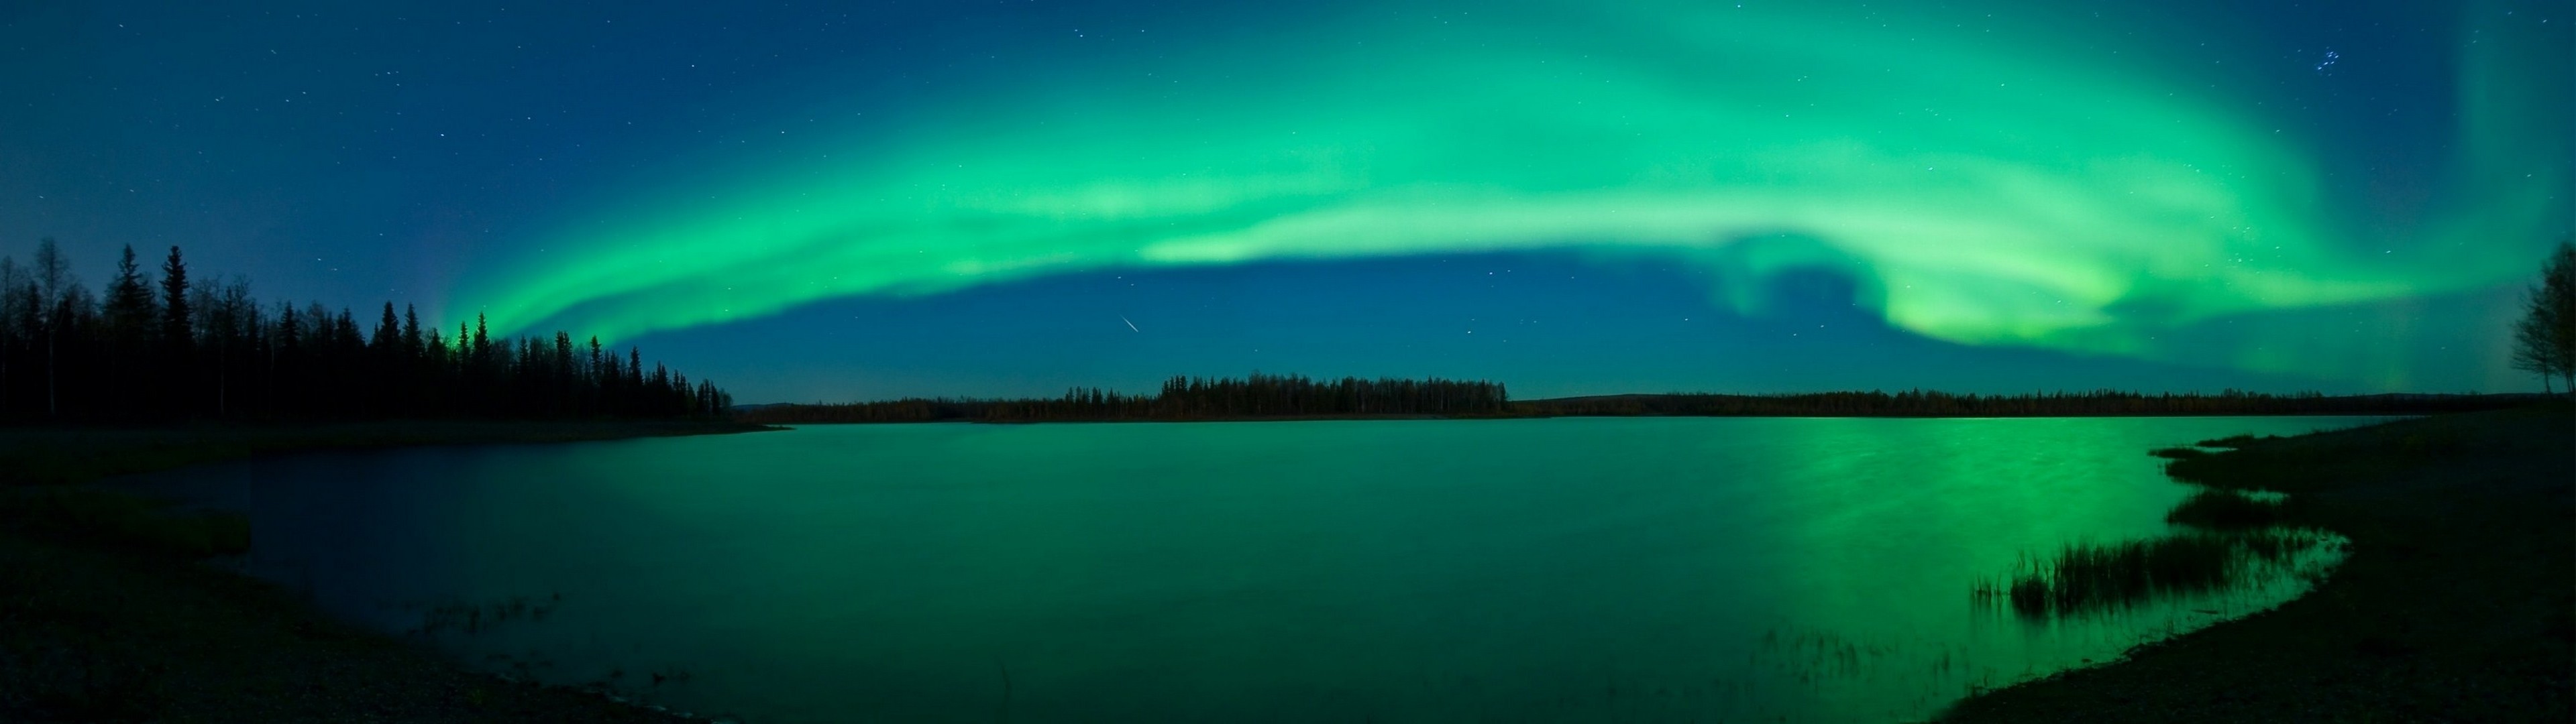 General 3840x1080 aurorae nature landscape multiple display lake trees water nordic landscapes